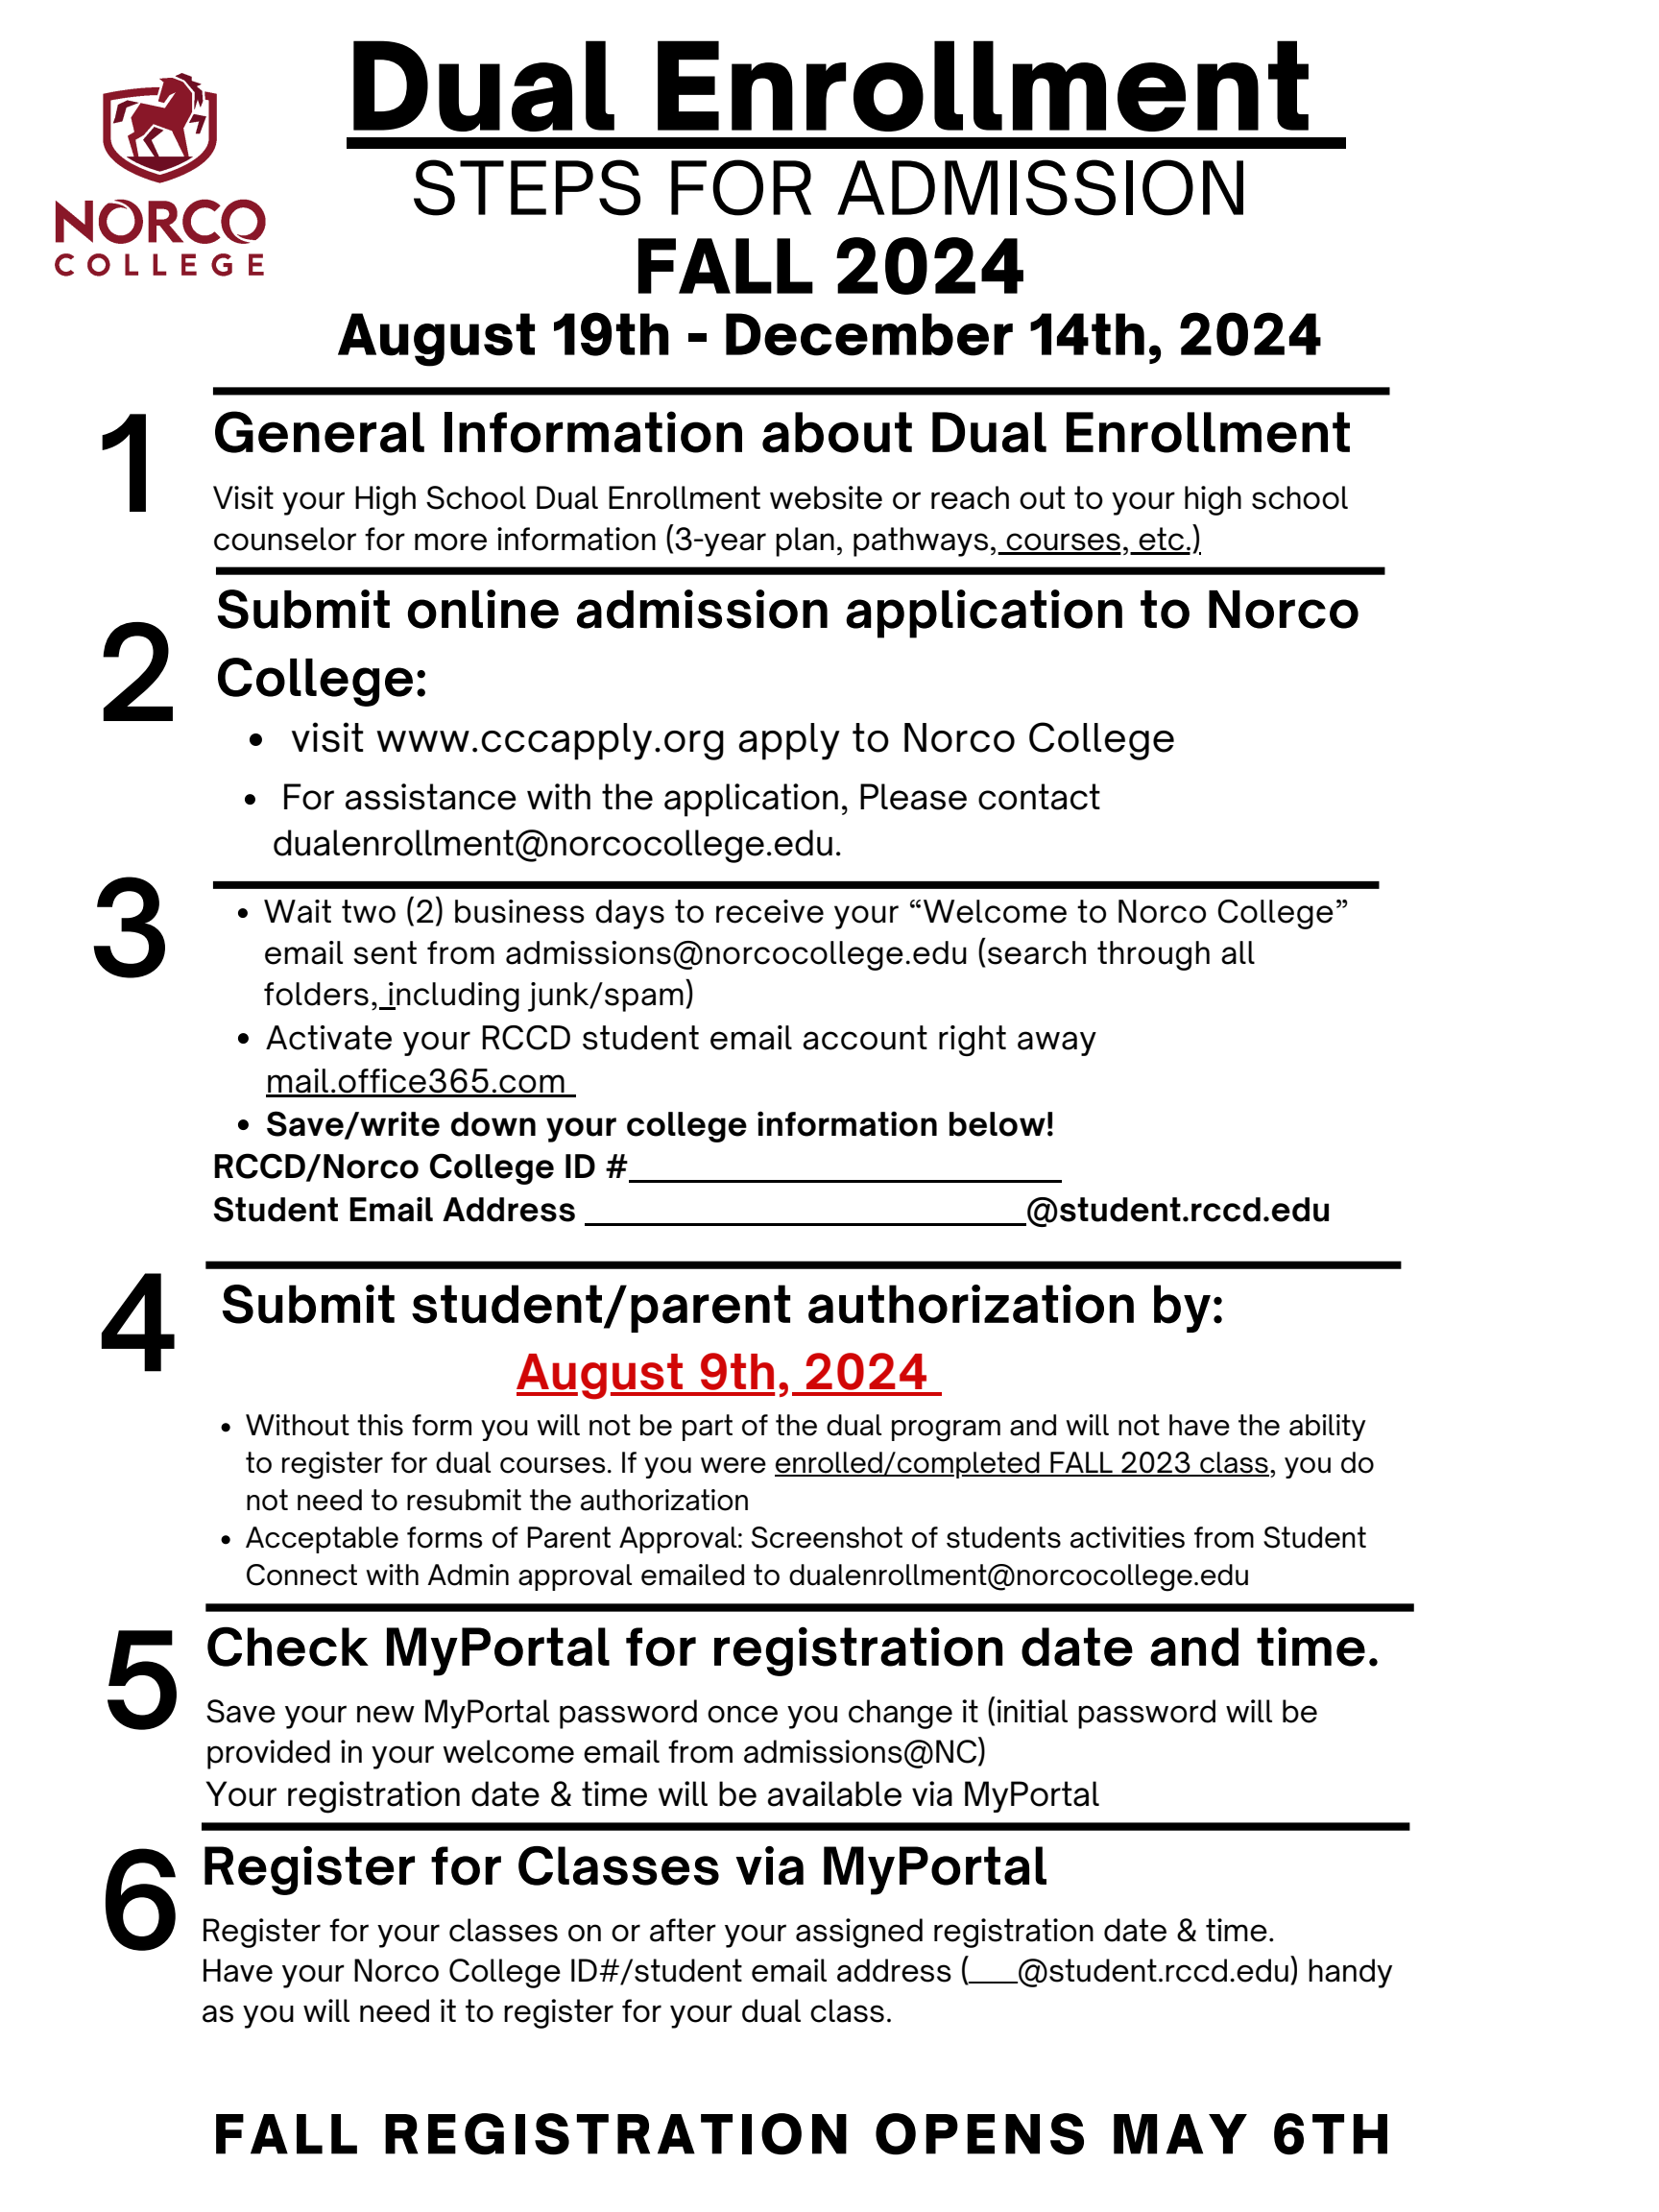 Dual Enrollment Steps for Admission - Fall 2024